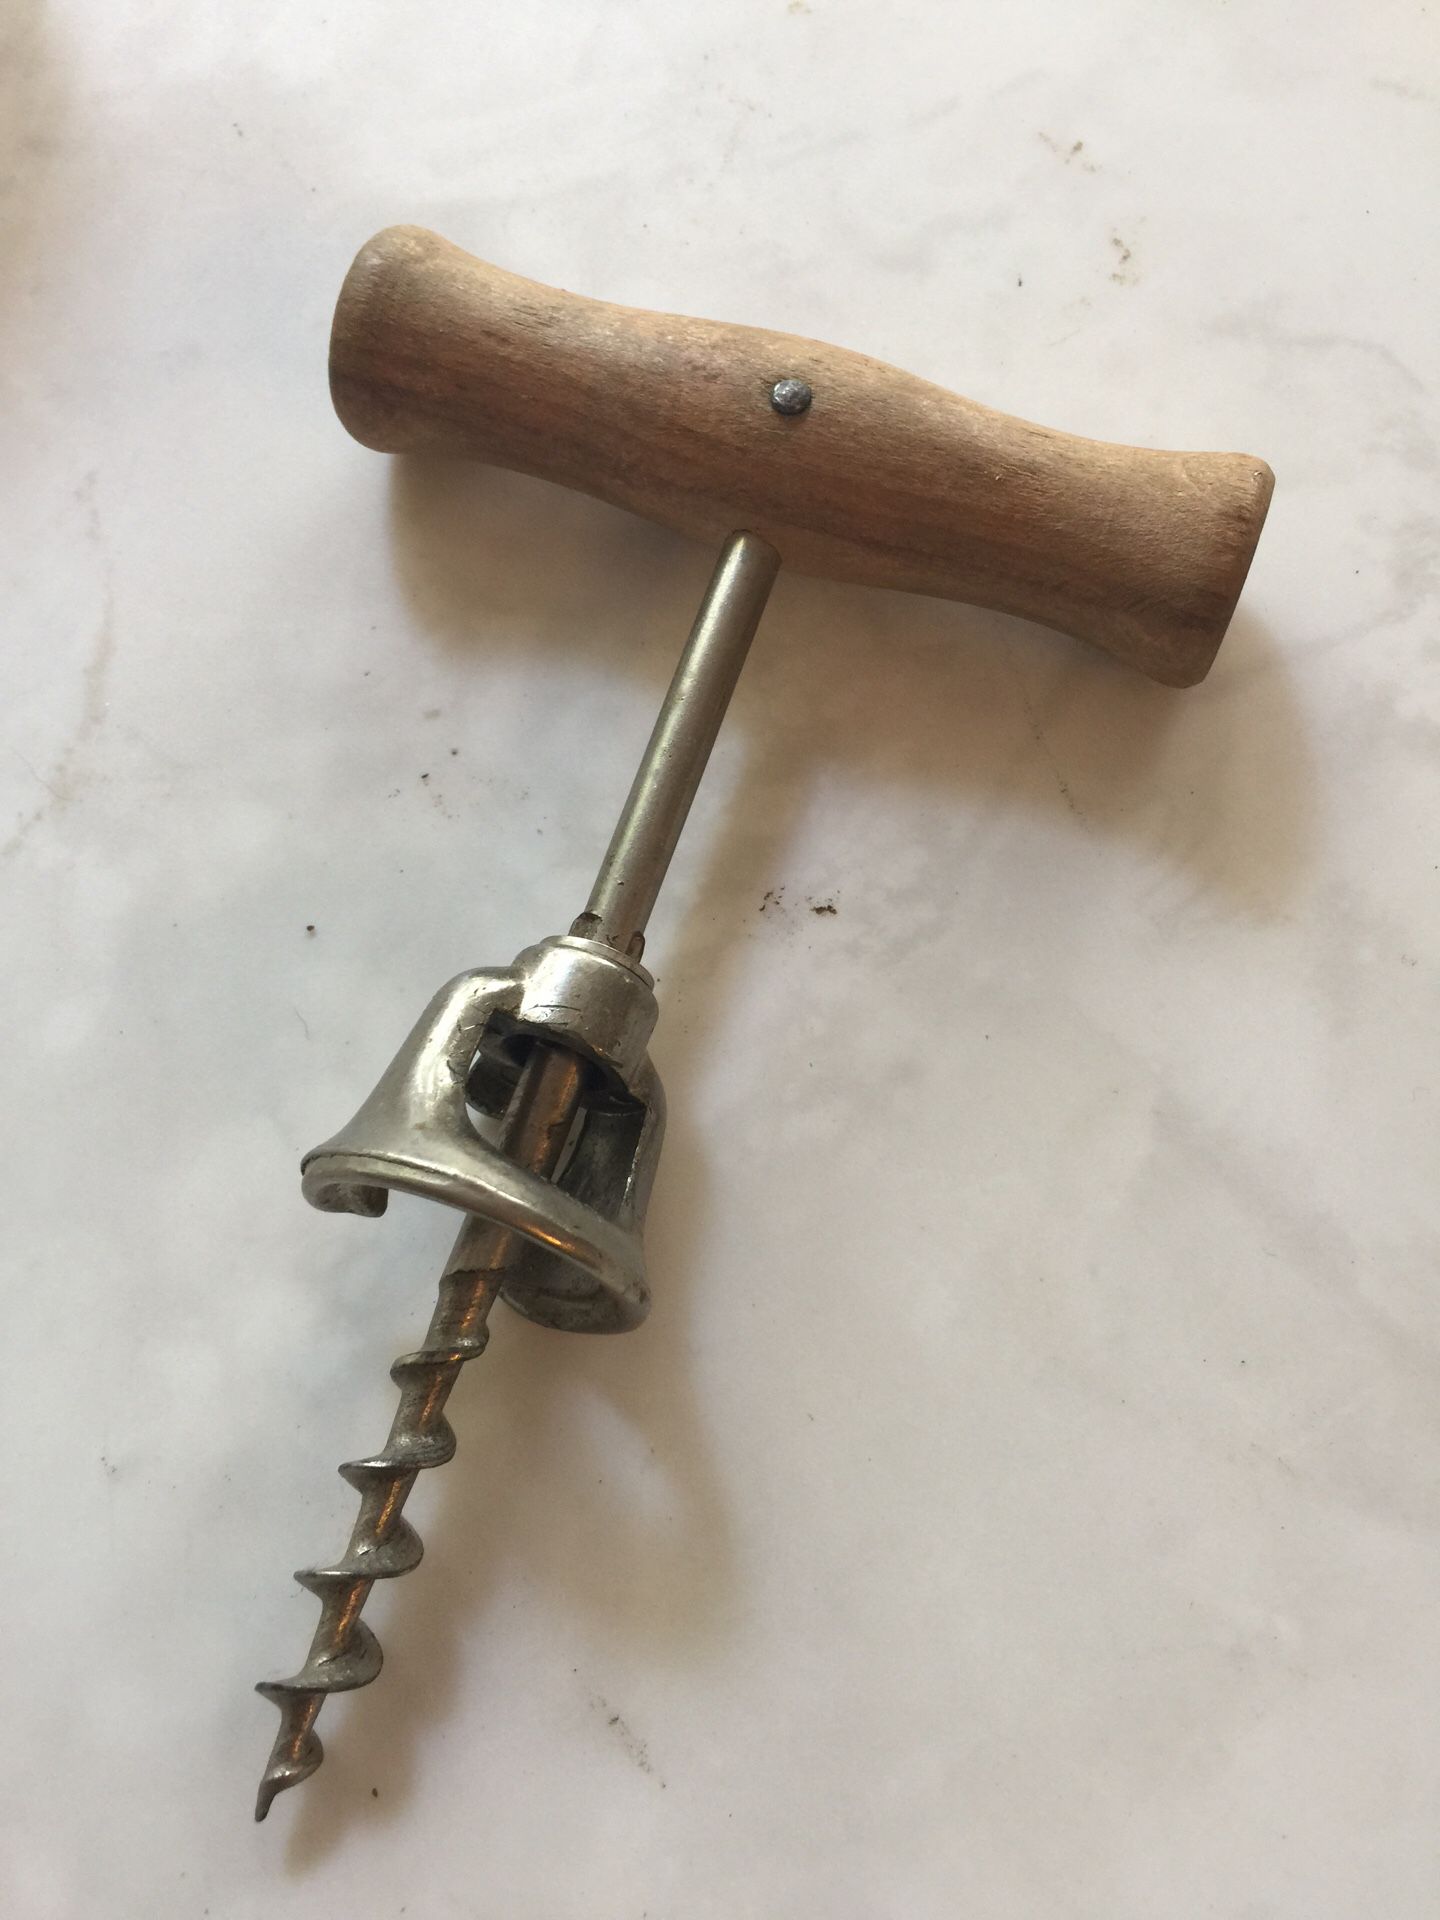 Antique corkscrew wine bottle opener